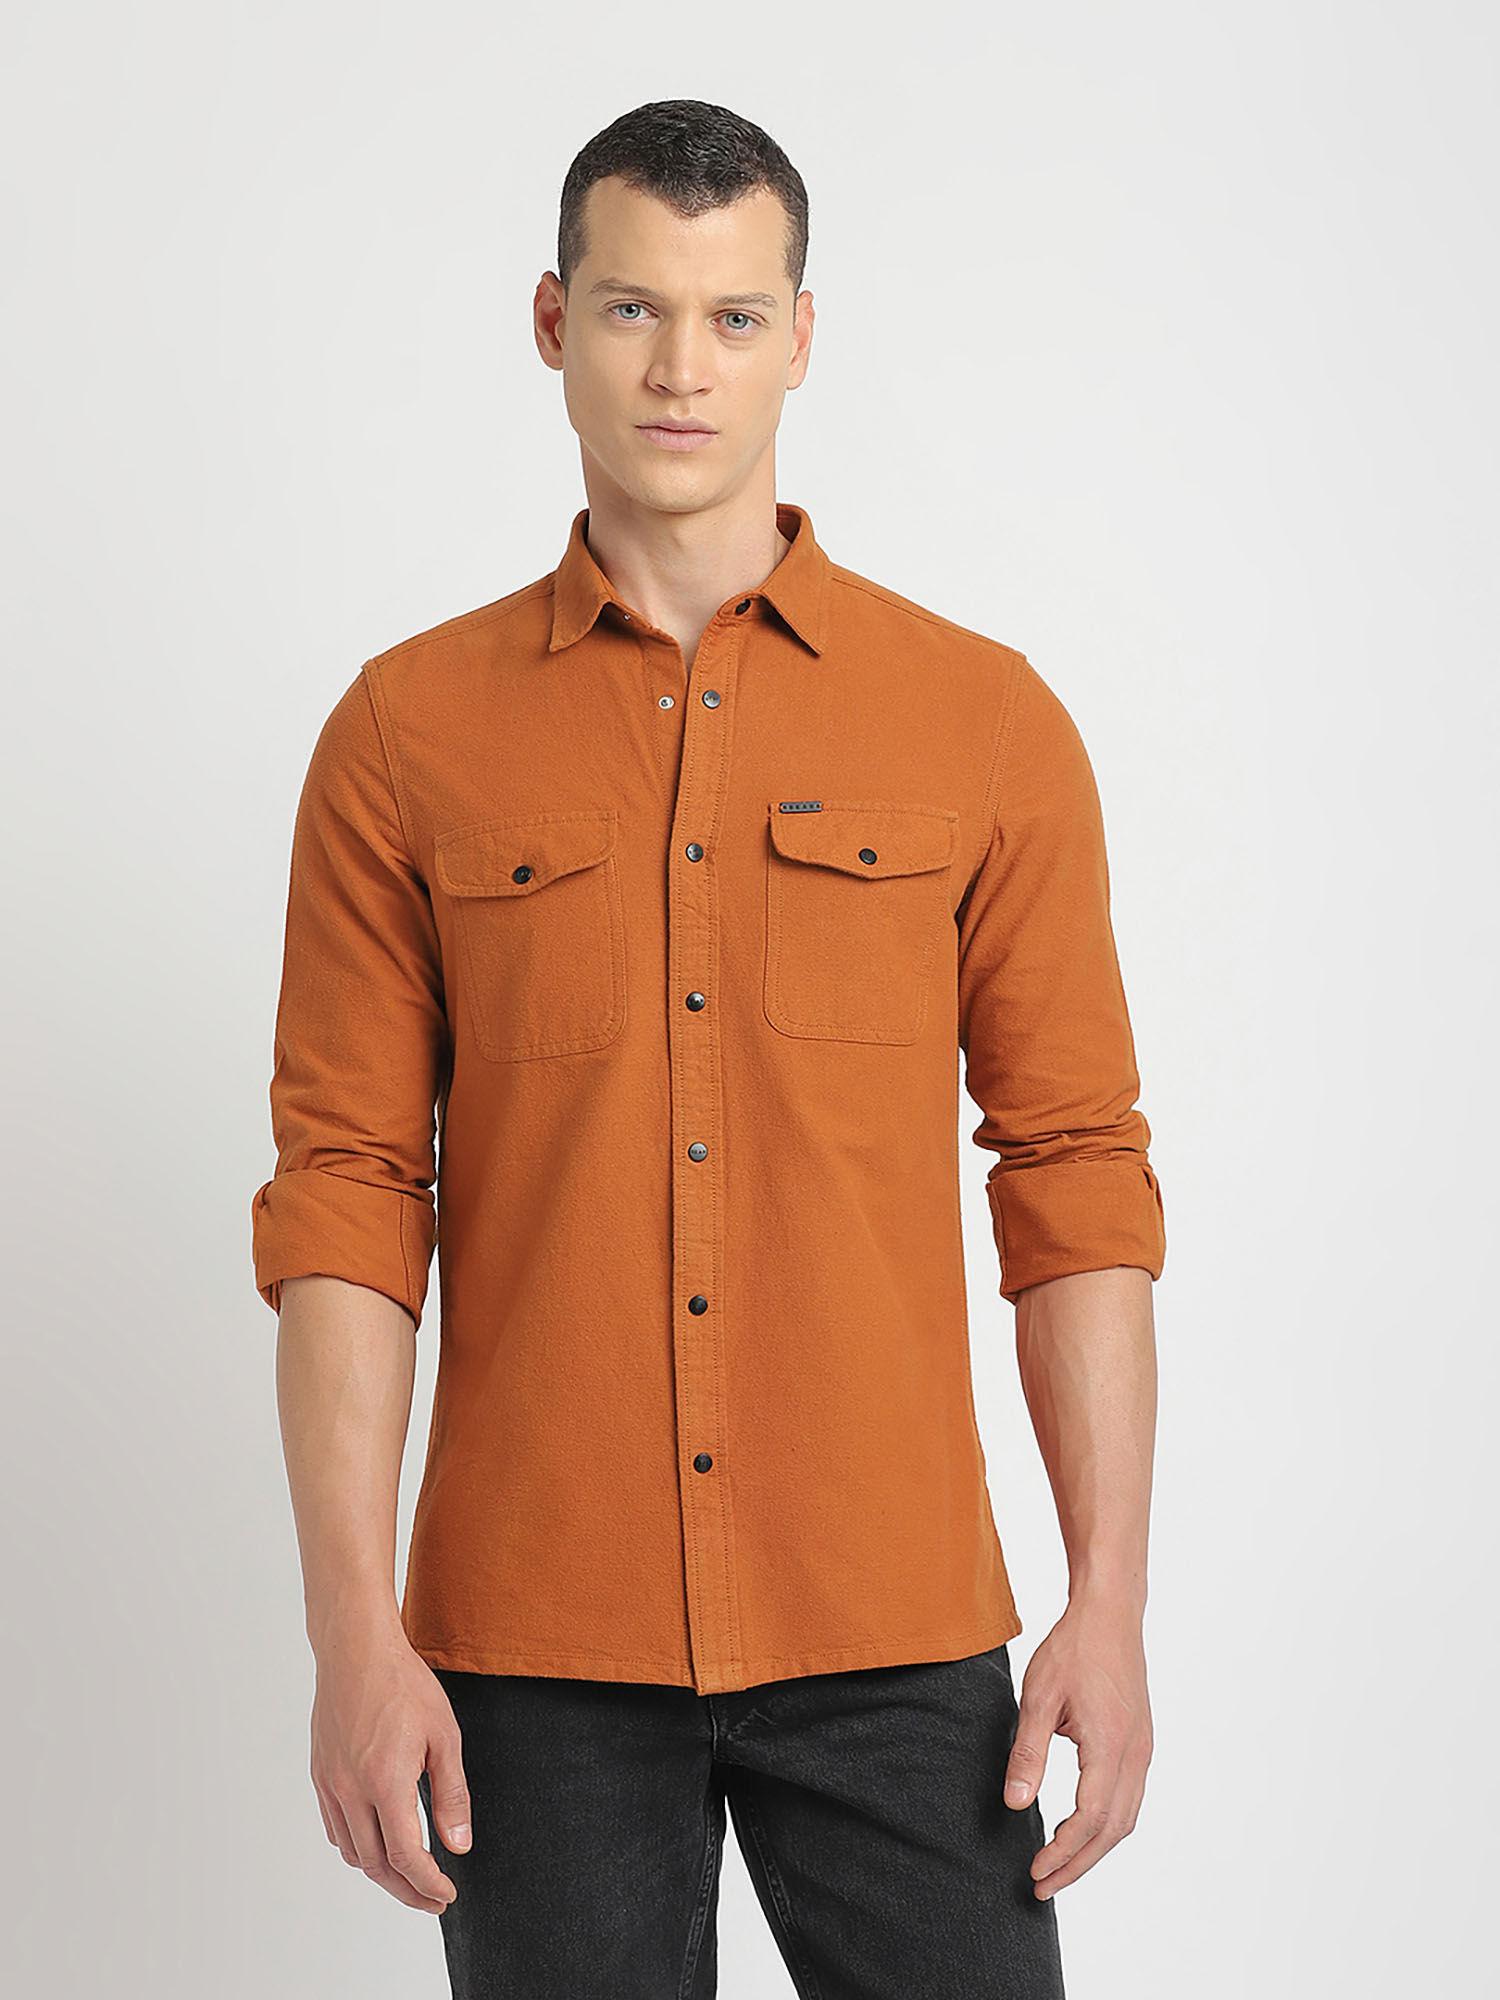 men-orange-solid-slim-fit-cotton-casual-shirt-with-flap-pocket